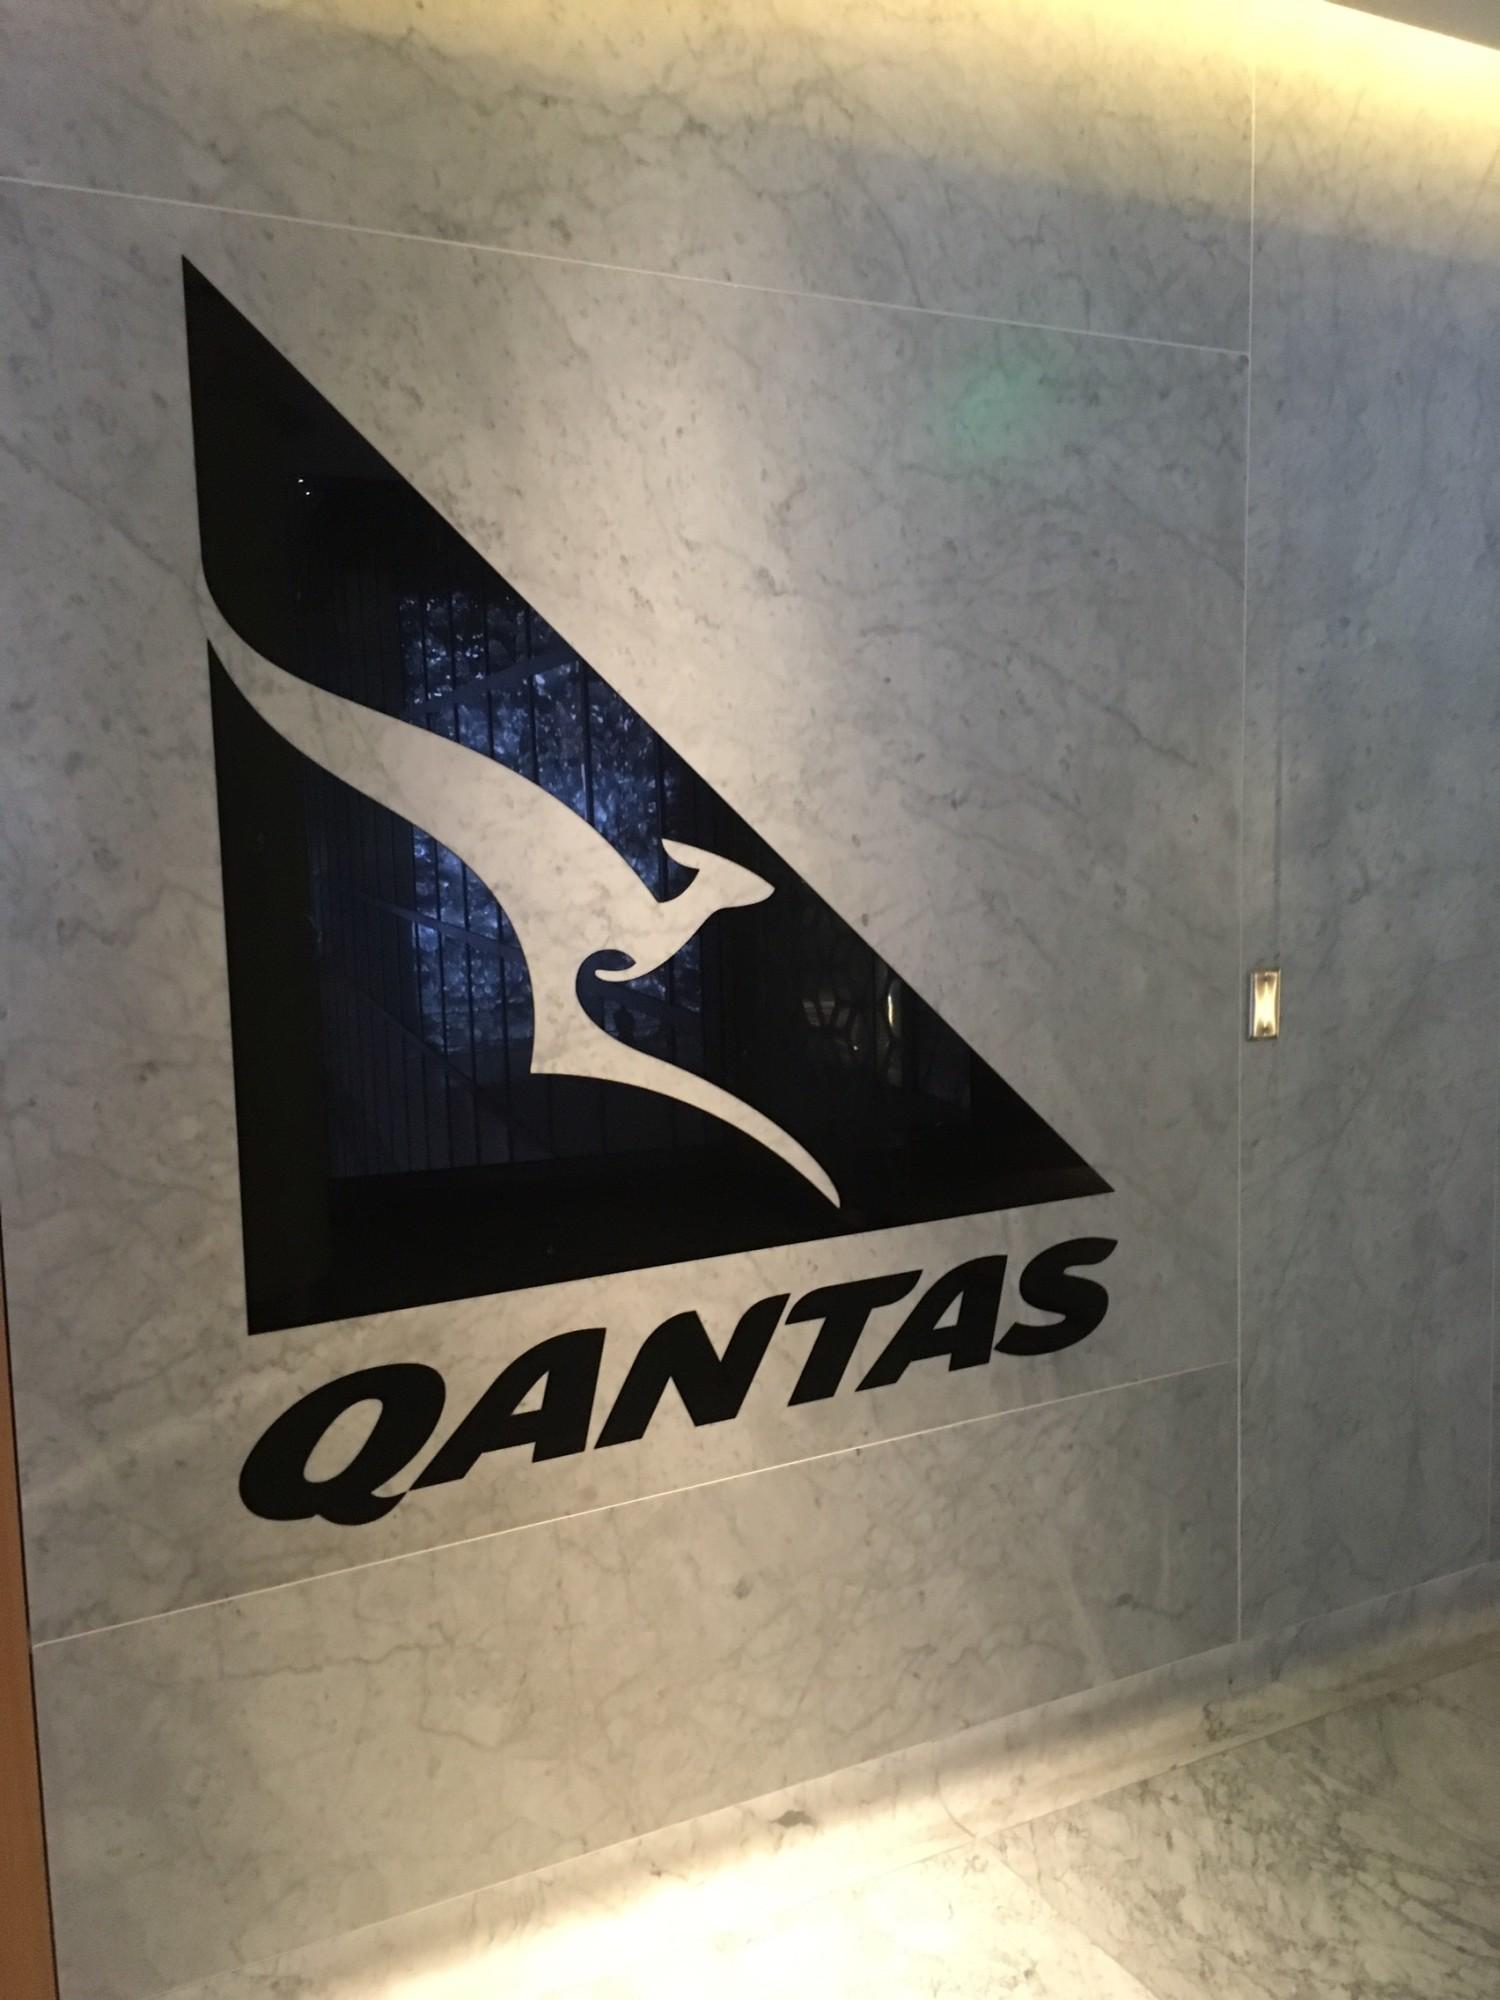 Qantas Airways International First Lounge image 54 of 77